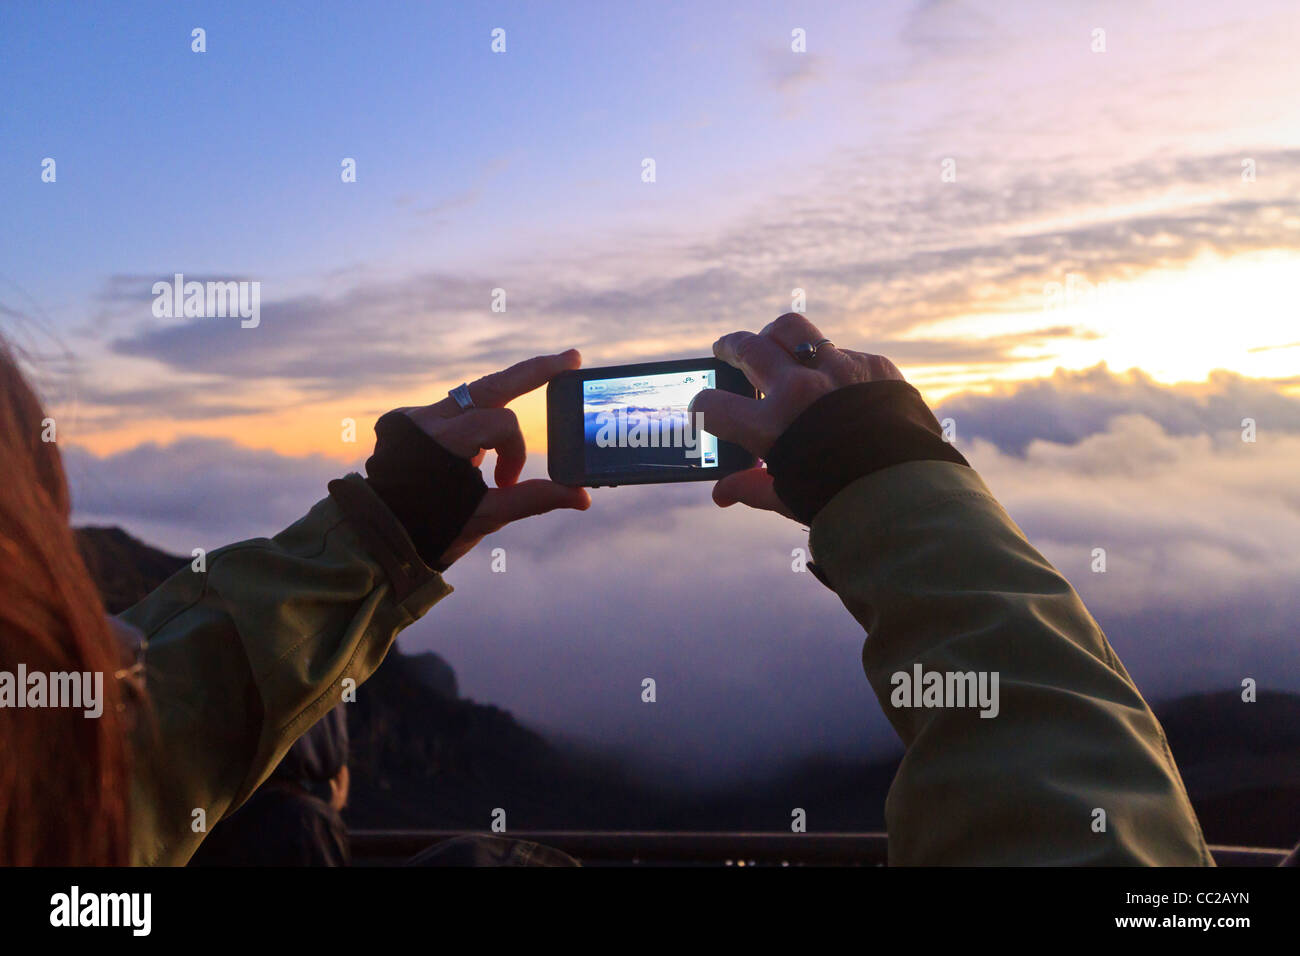 Visitor views scene through LCD screen and photographs sunrise with digital camera at Haleakala Crater, Maui, Hawaii, USA. Stock Photo